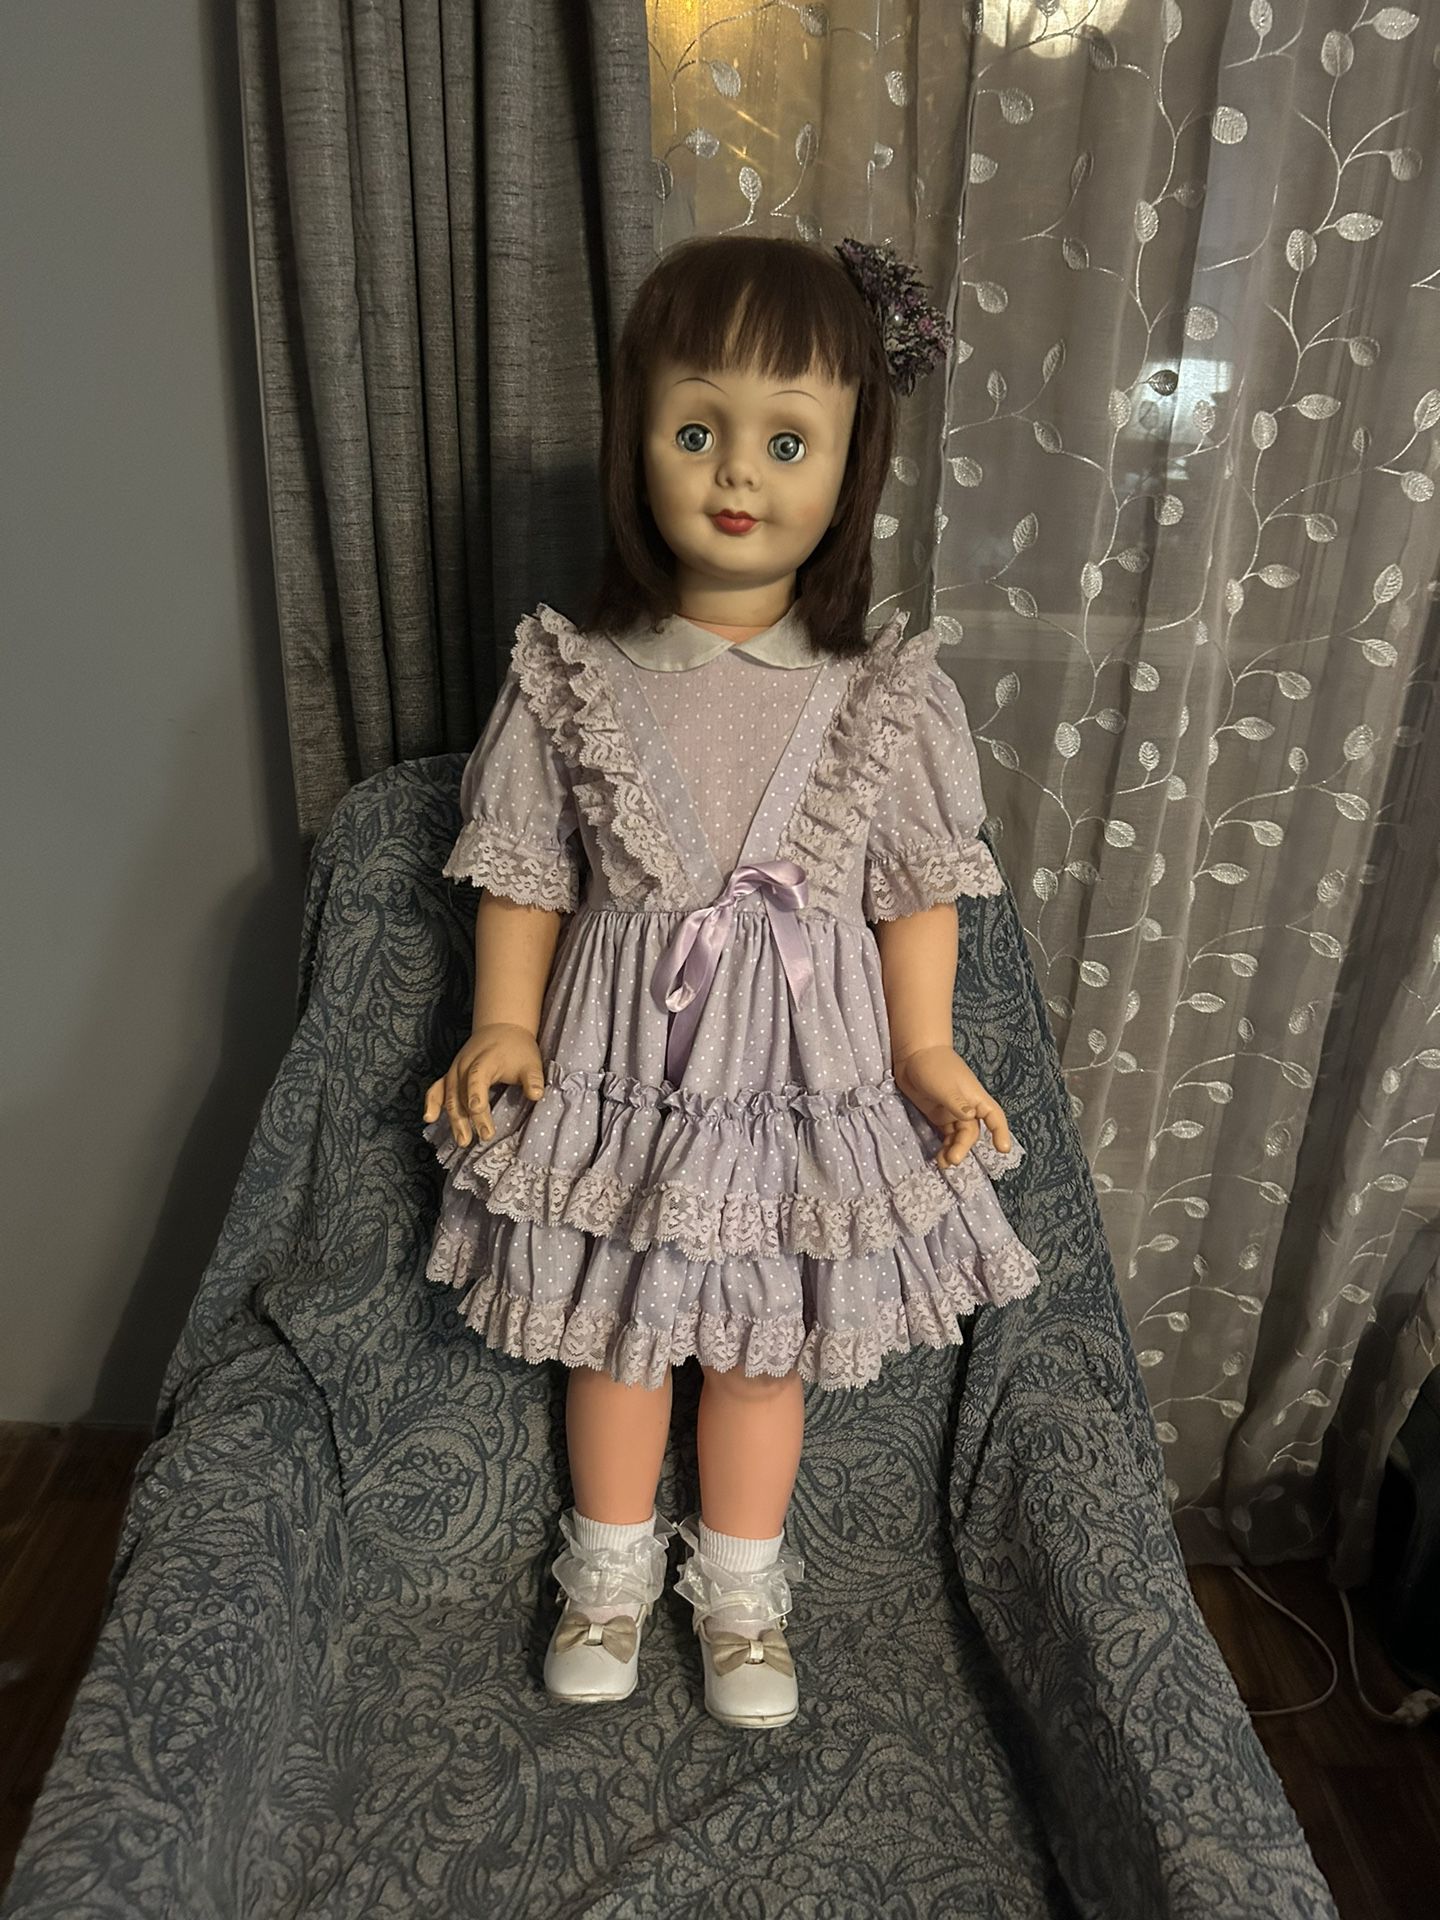 1950’s Vintage Walking Doll $275 Price Slashed$200